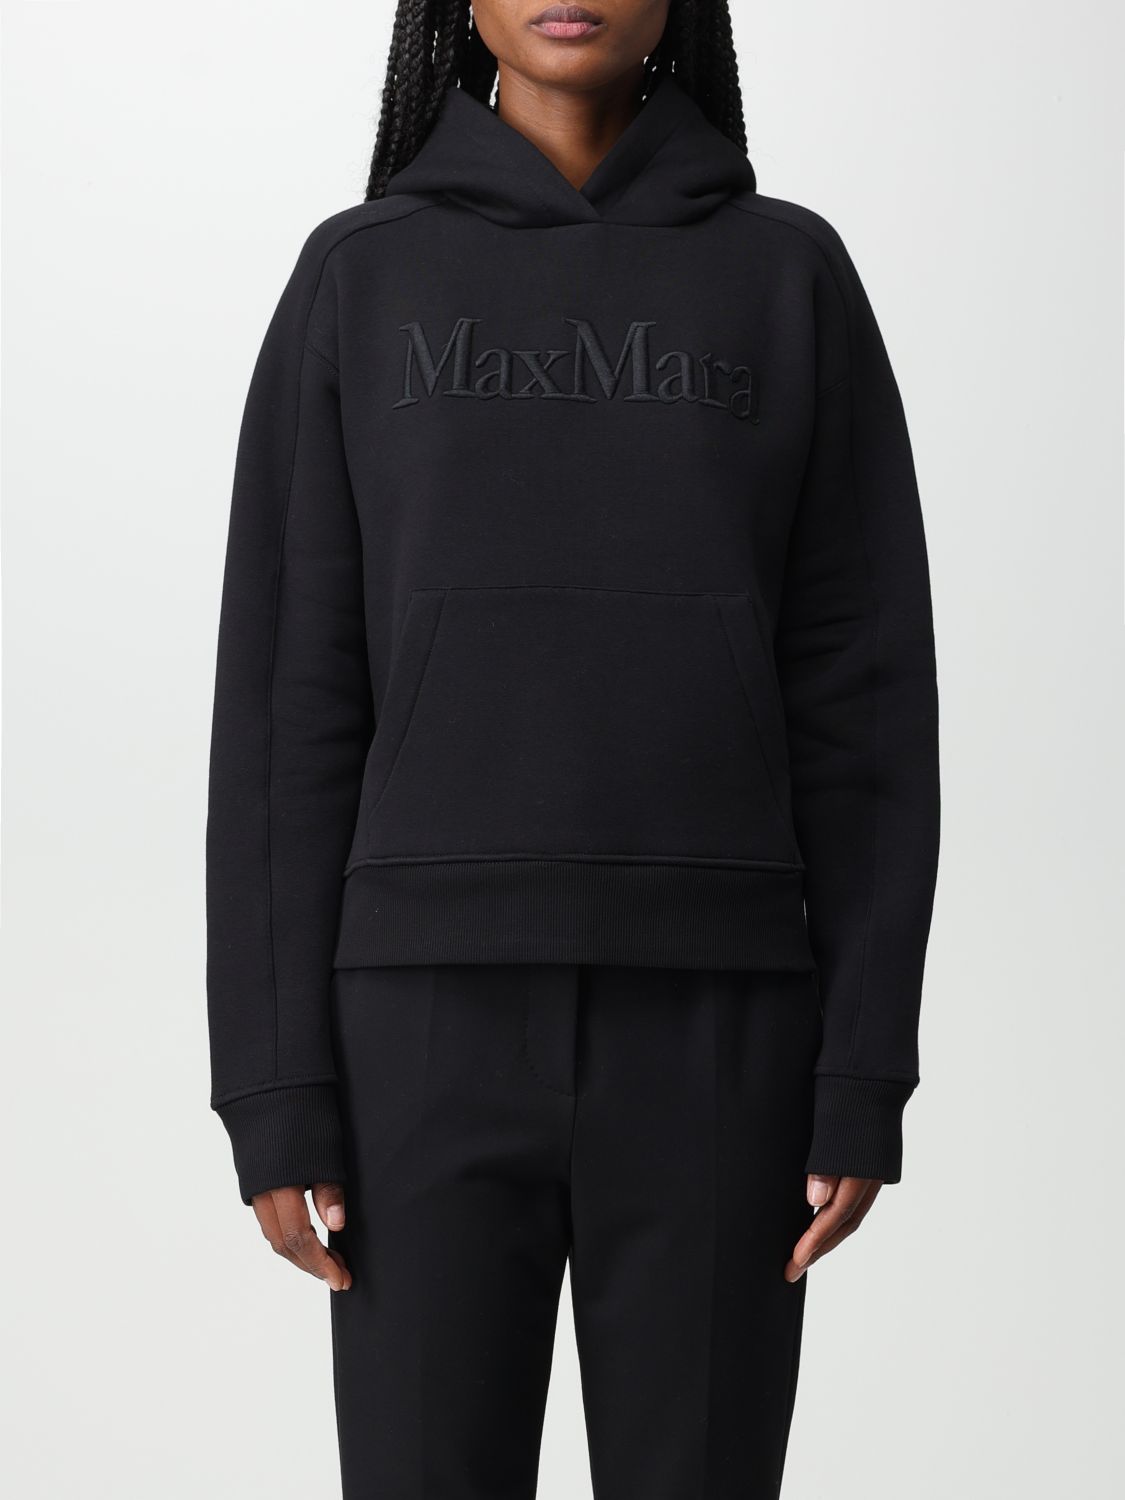 S MAX MARA: stretch cotton blend hoodie - Black | S Max Mara sweatshirt ...